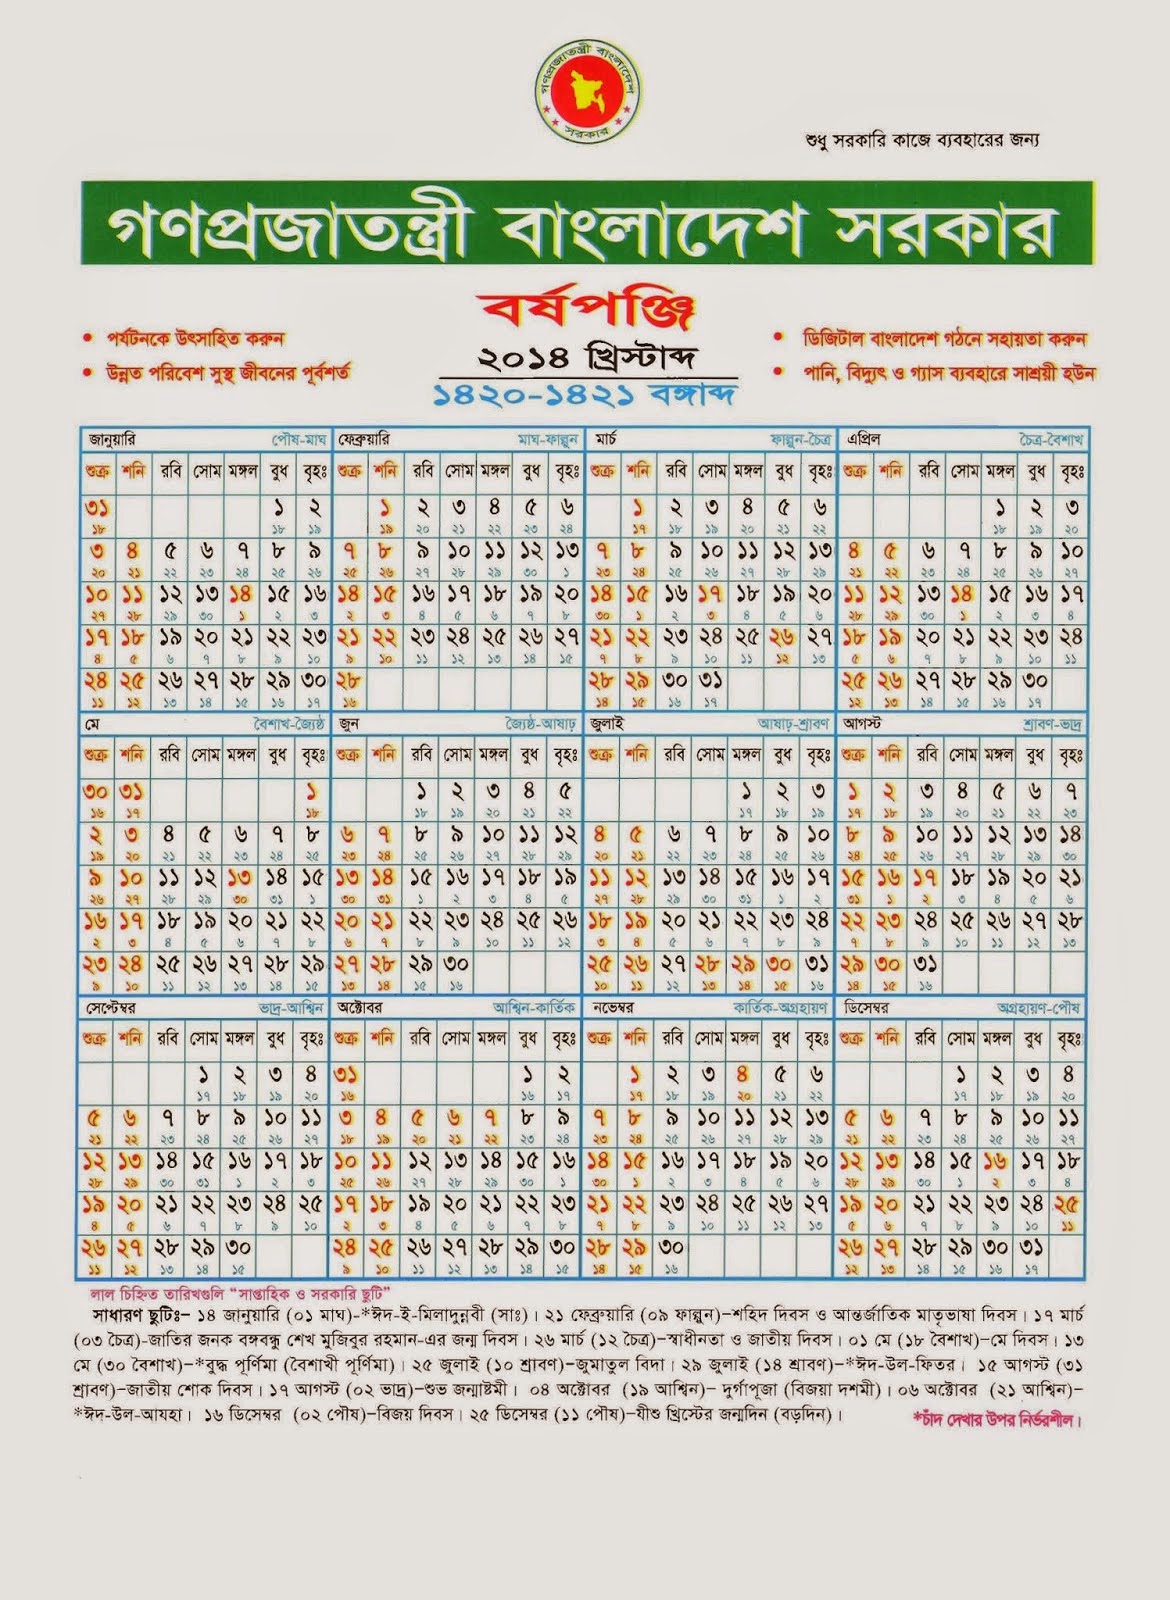 BD Govt Calendar 2014(Bangla 1420-1421) | Mominul's Blog